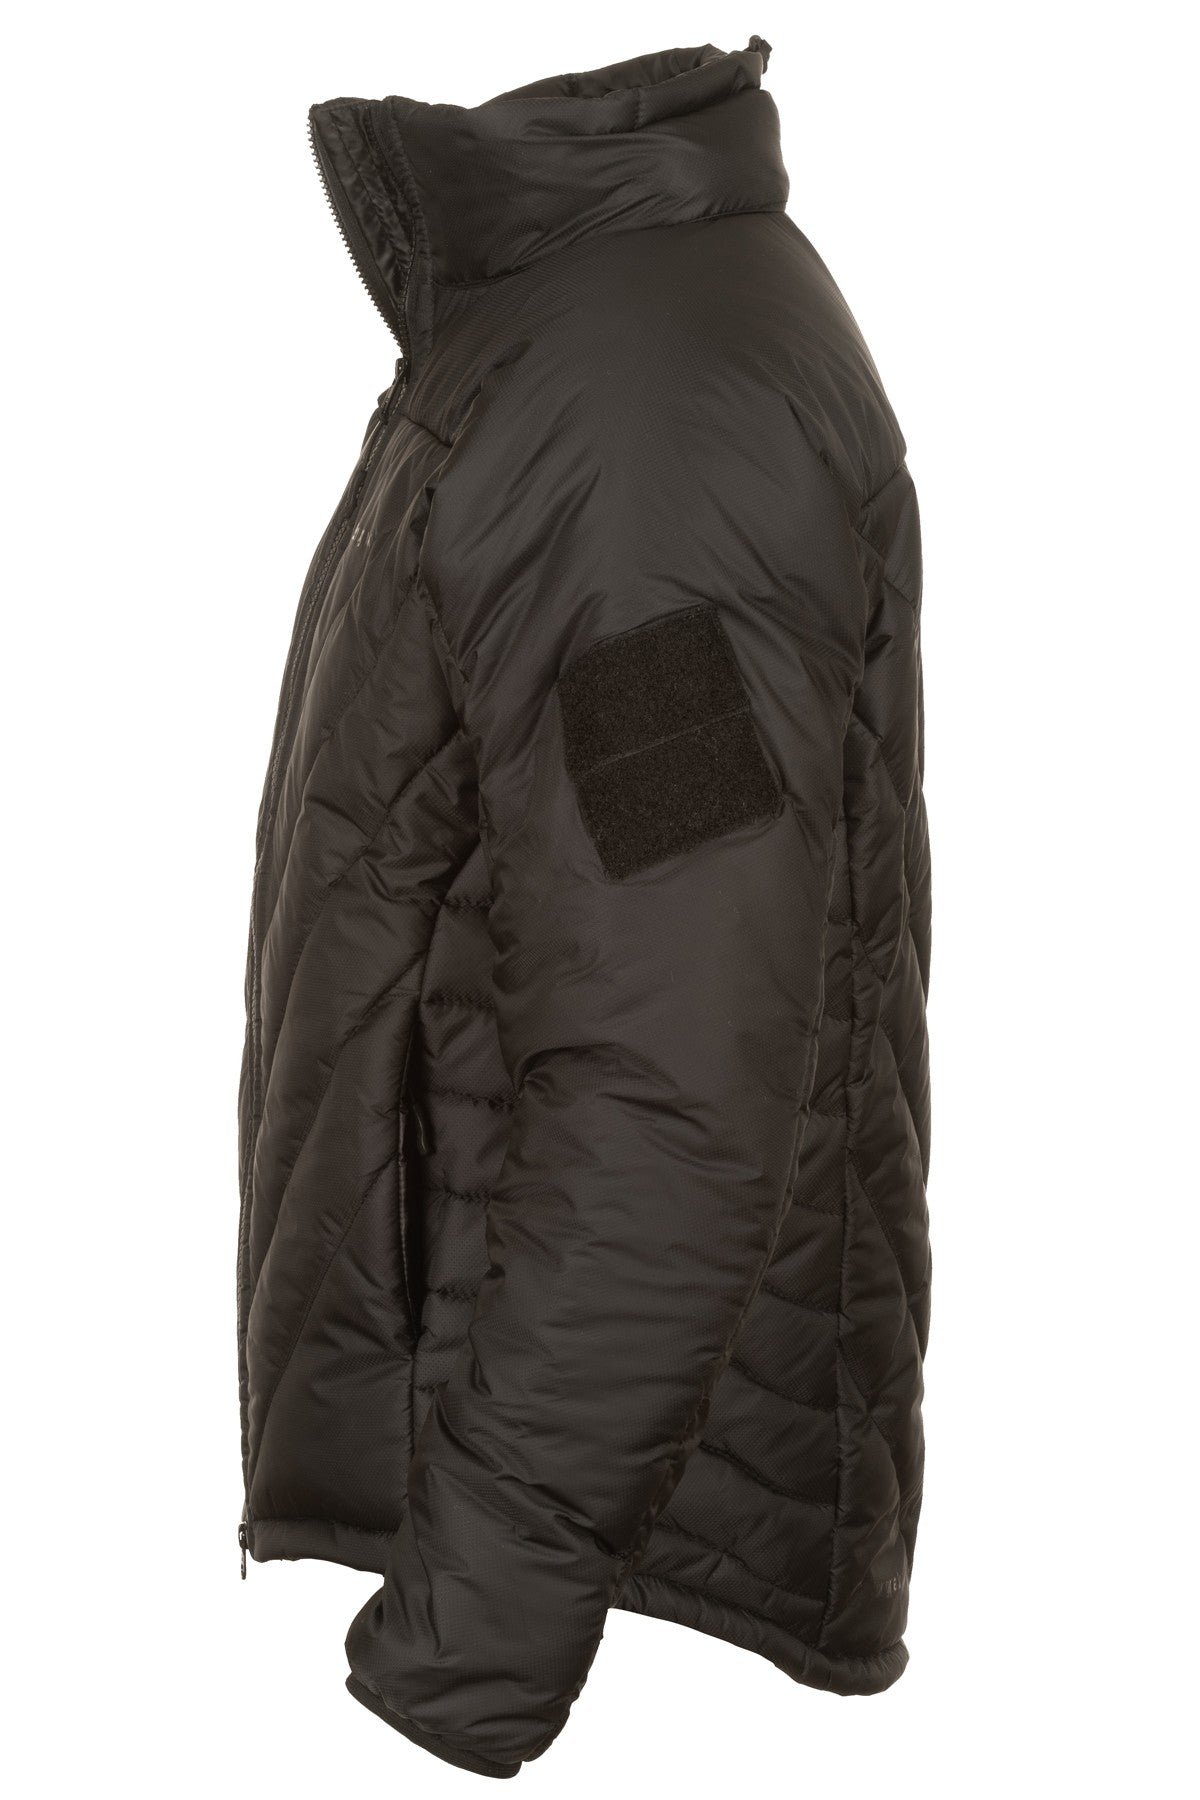 Snugpak SJ6 - Mid-Weight Insulated Jacket